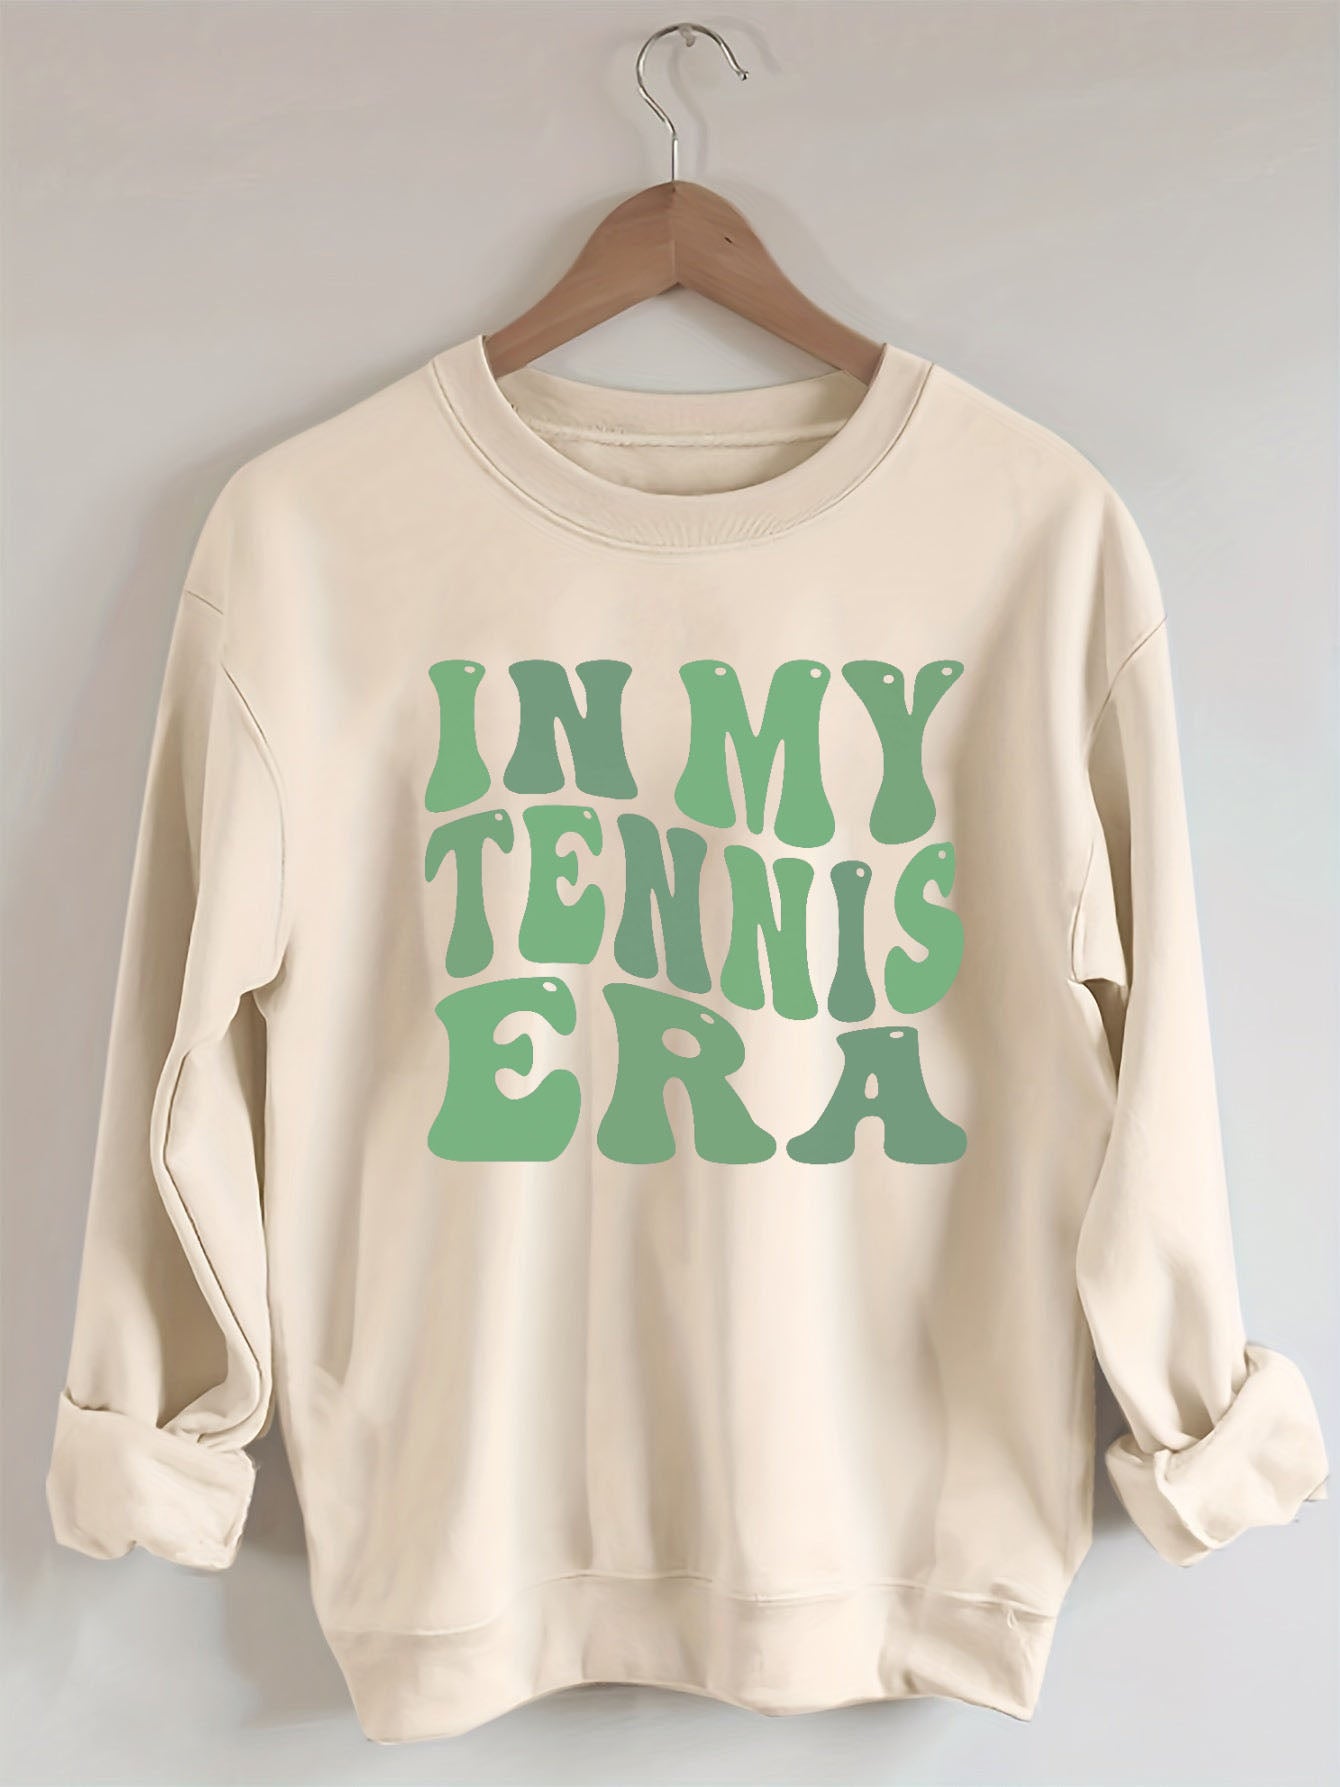 In My Tennis Era Sweatshirts